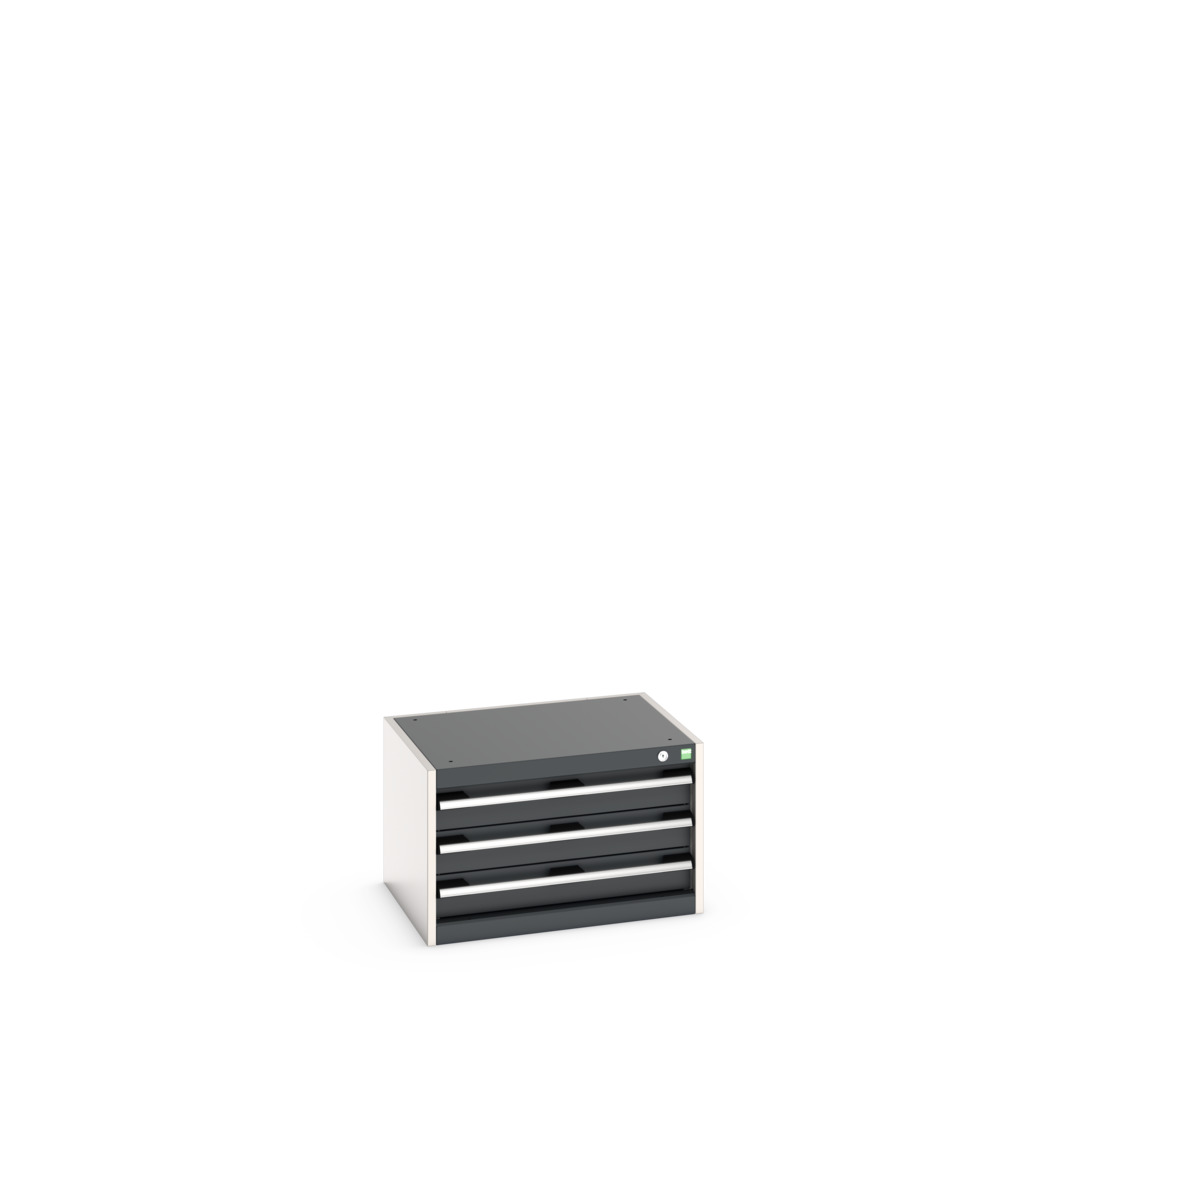 40011068. - cubio drawer cabinet